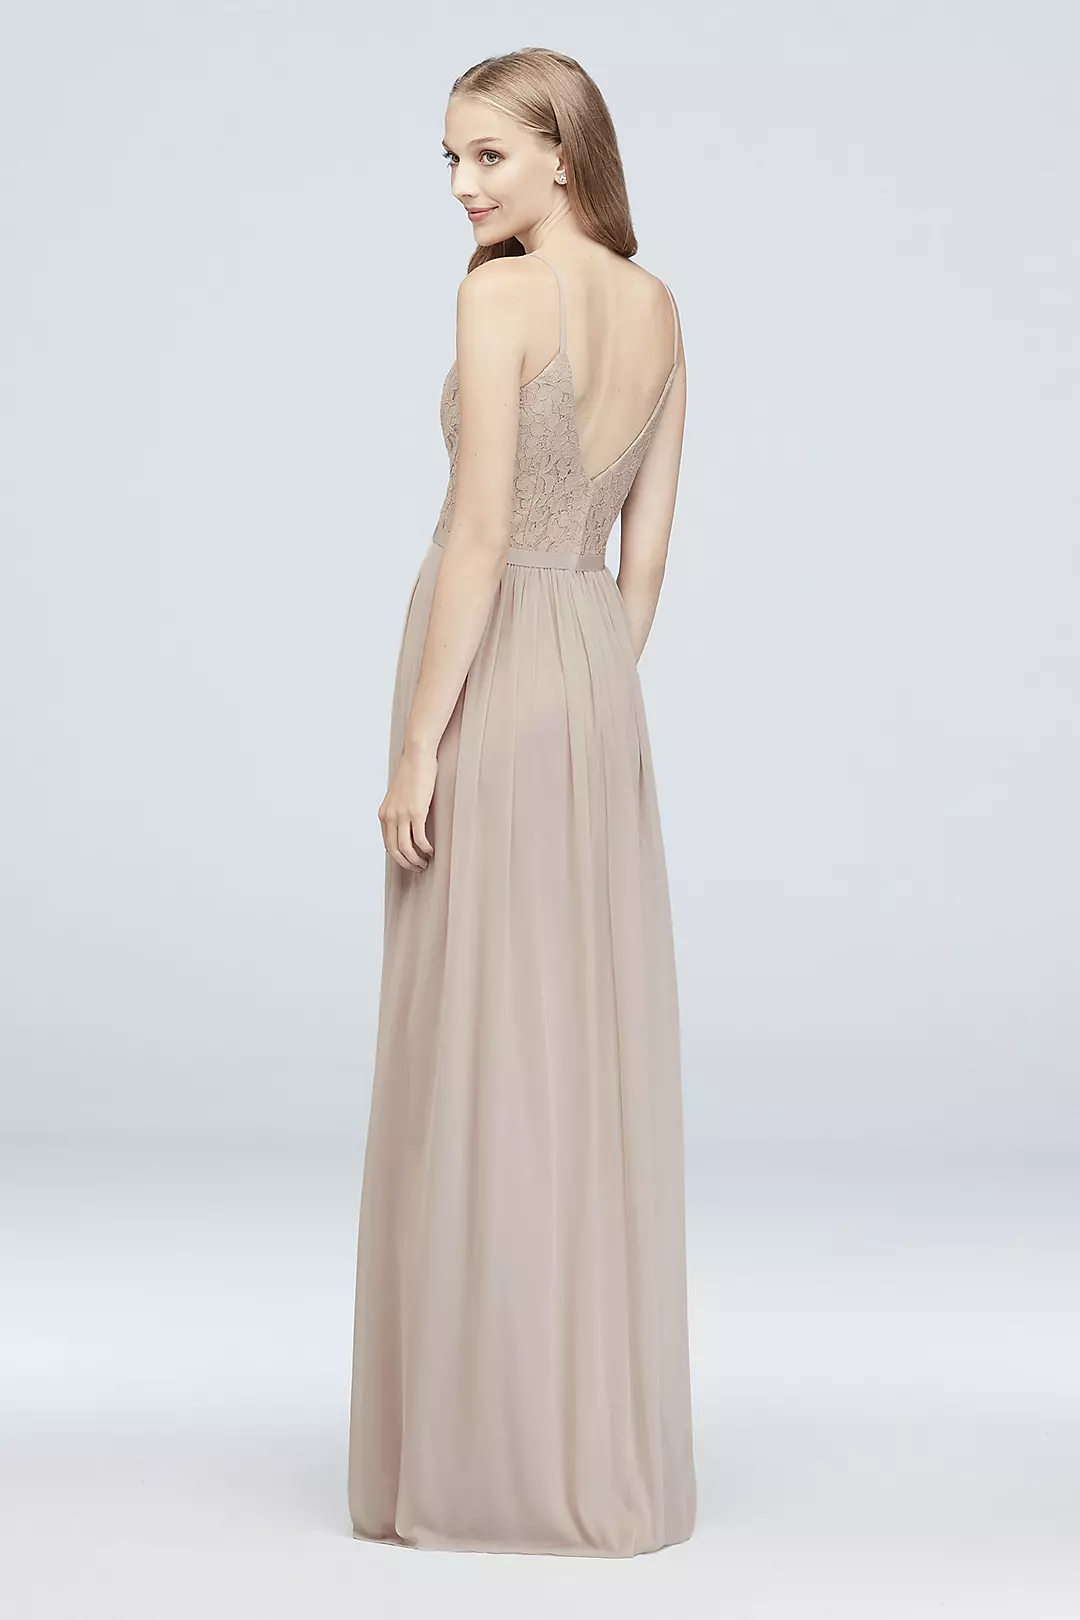 Long Corded Lace and Mesh Bridesmaid Dress Image 2